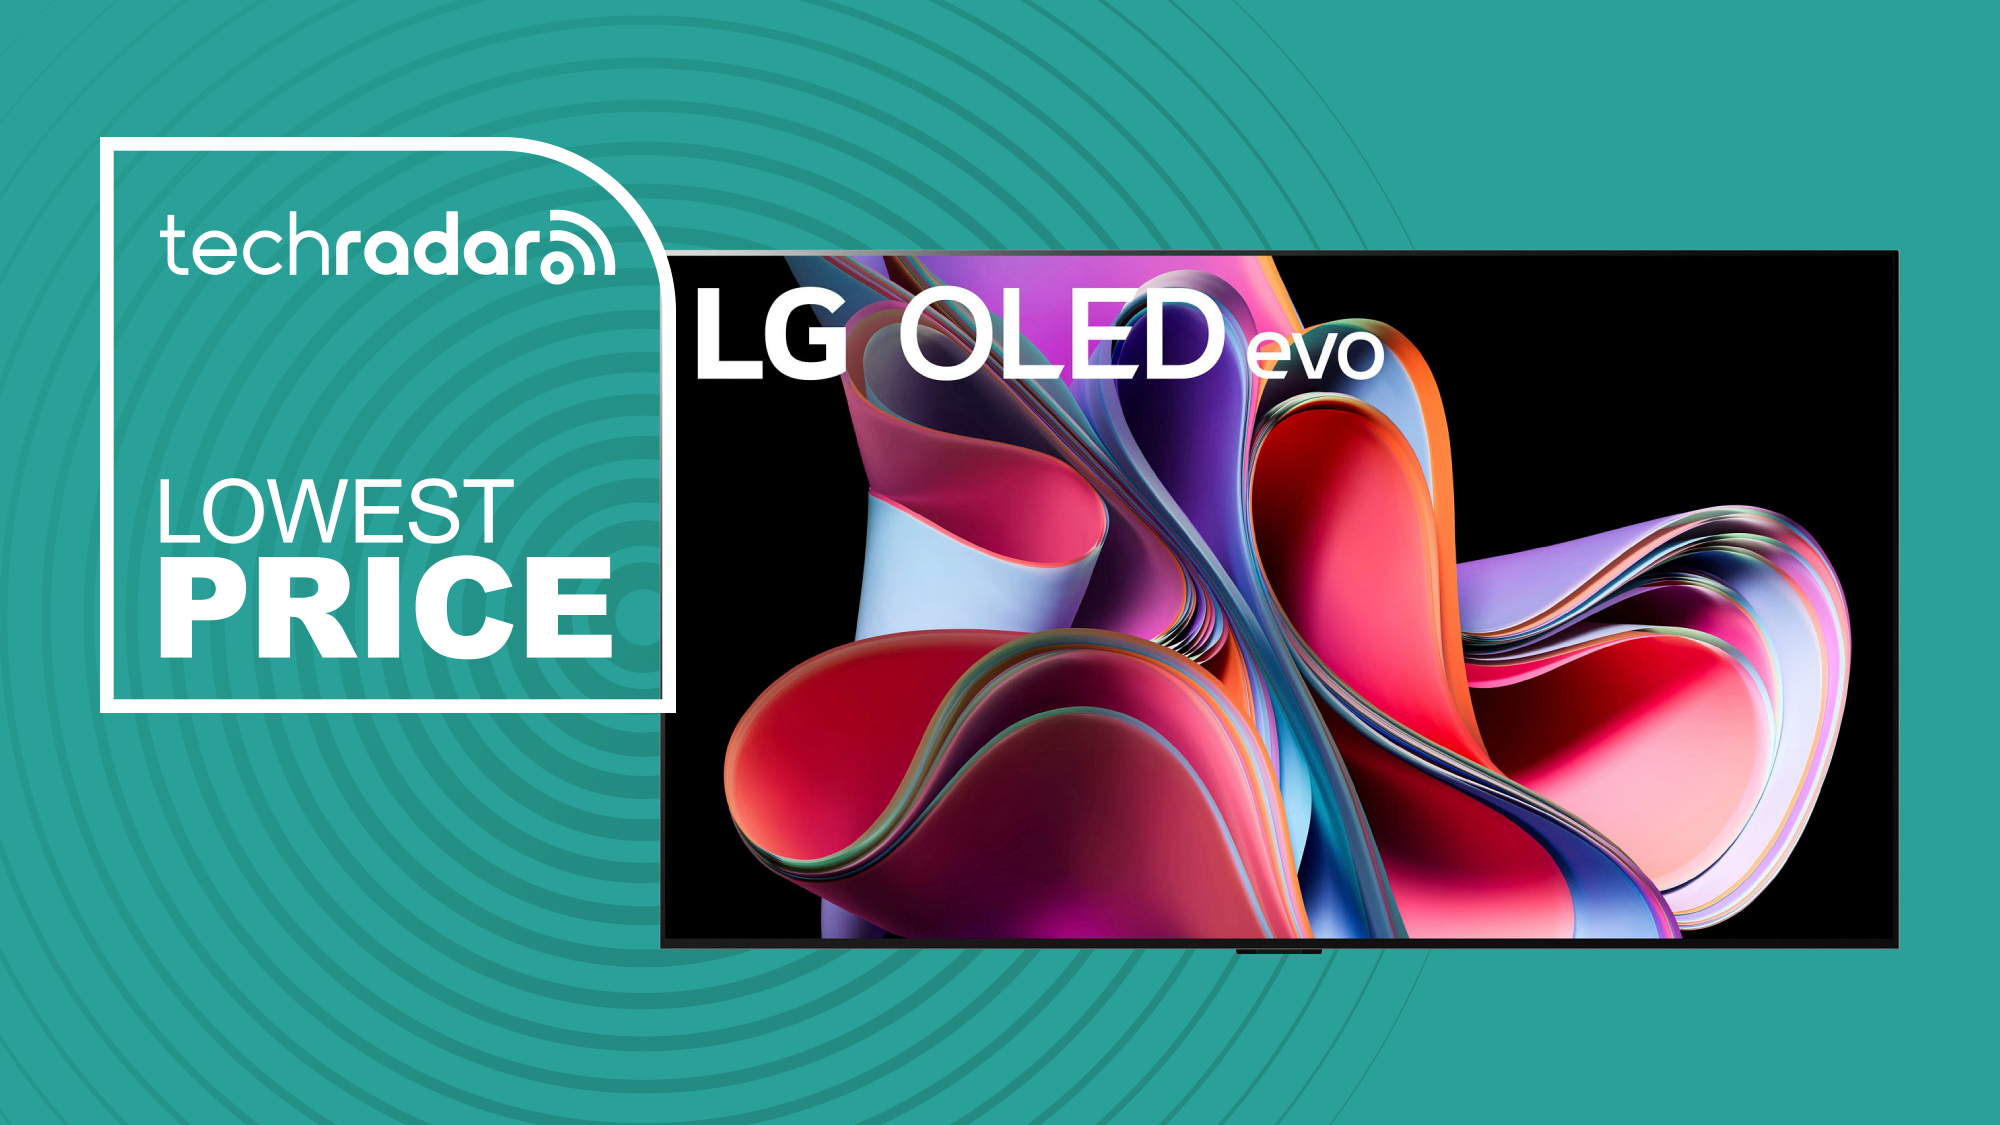 LG OLED TVs  John Lewis & Partners